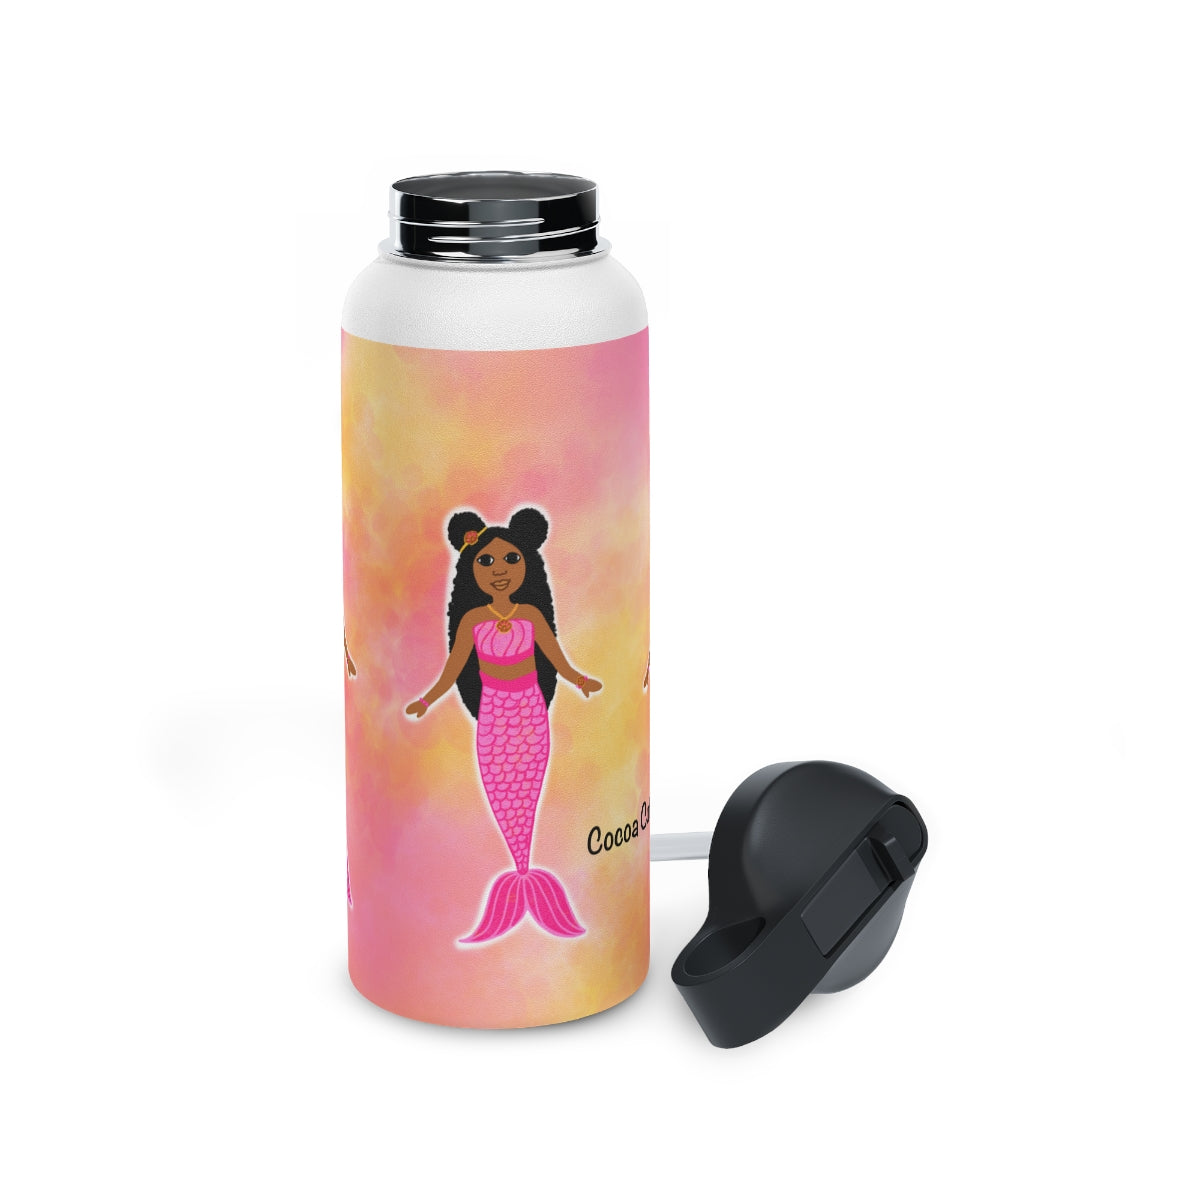 Pink Mermaid Cocoa Cutie Stainless Steel Water Bottle